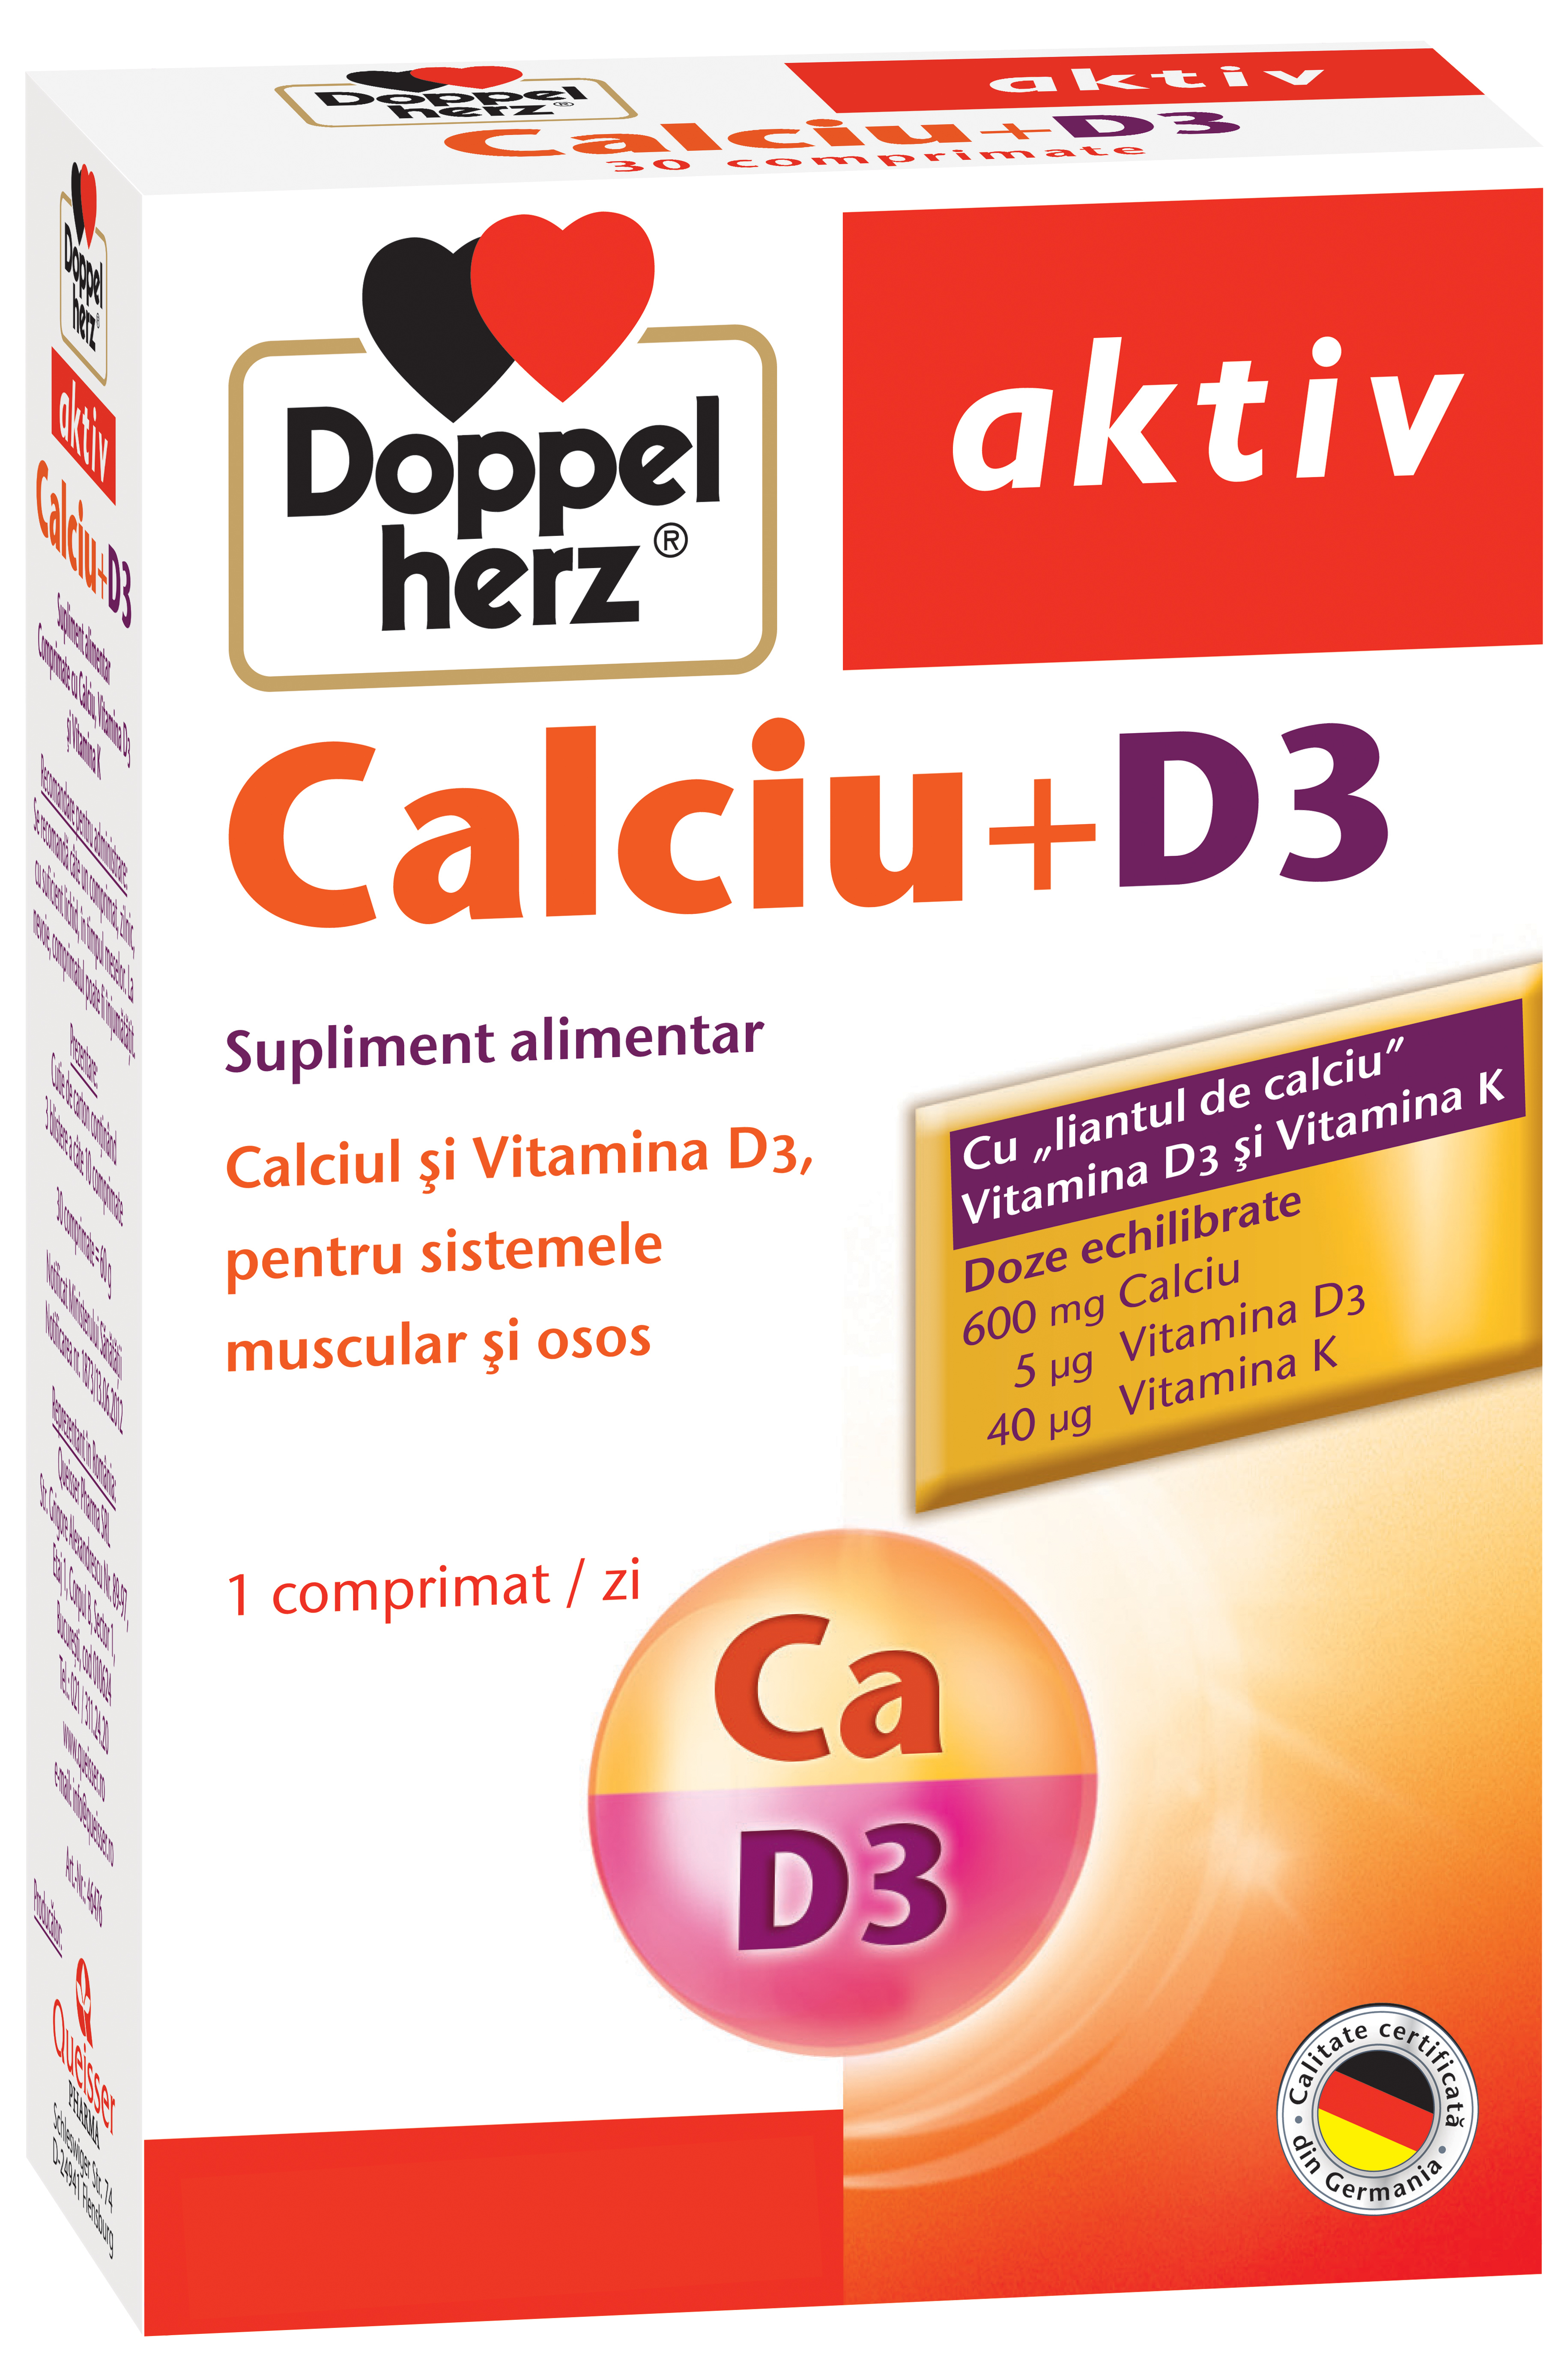 Osteoporoza - Doppelherz Aktiv Calciu + D3, 30 comprimate, sinapis.ro